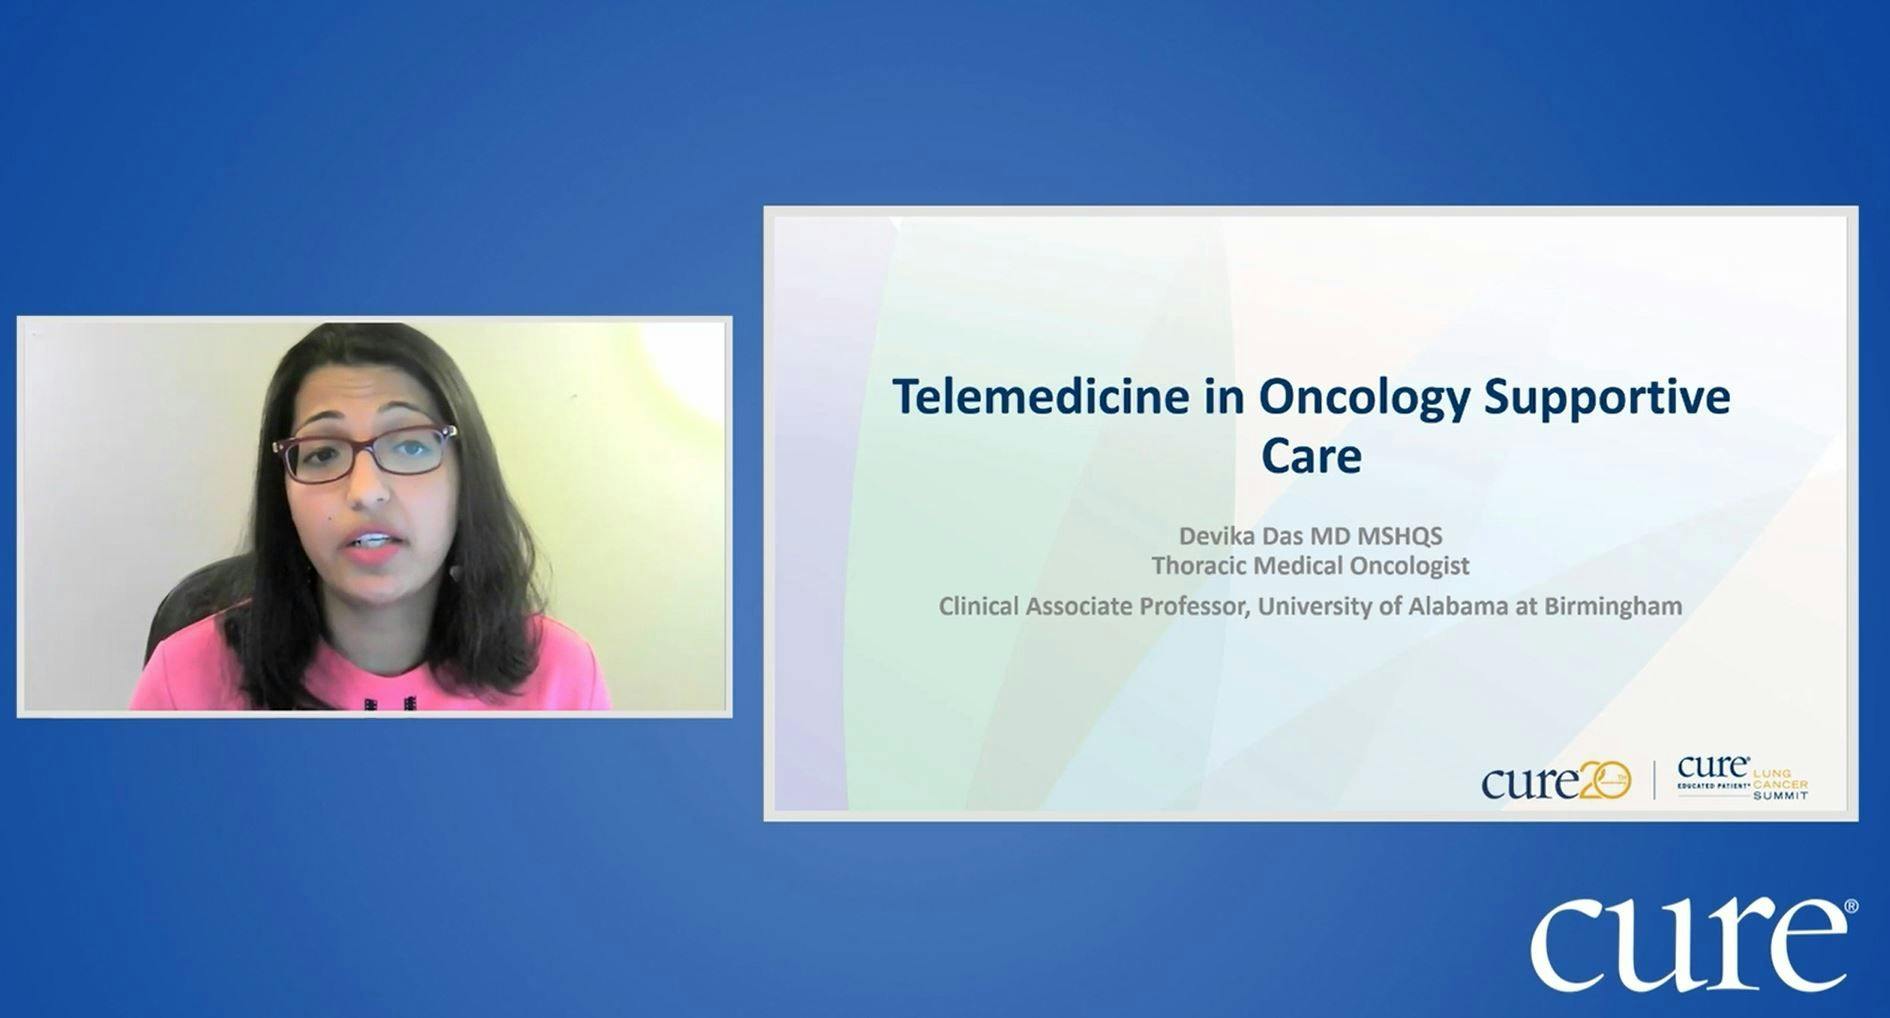 Dr. Devika Das explains telemedicine in cancer supportive care